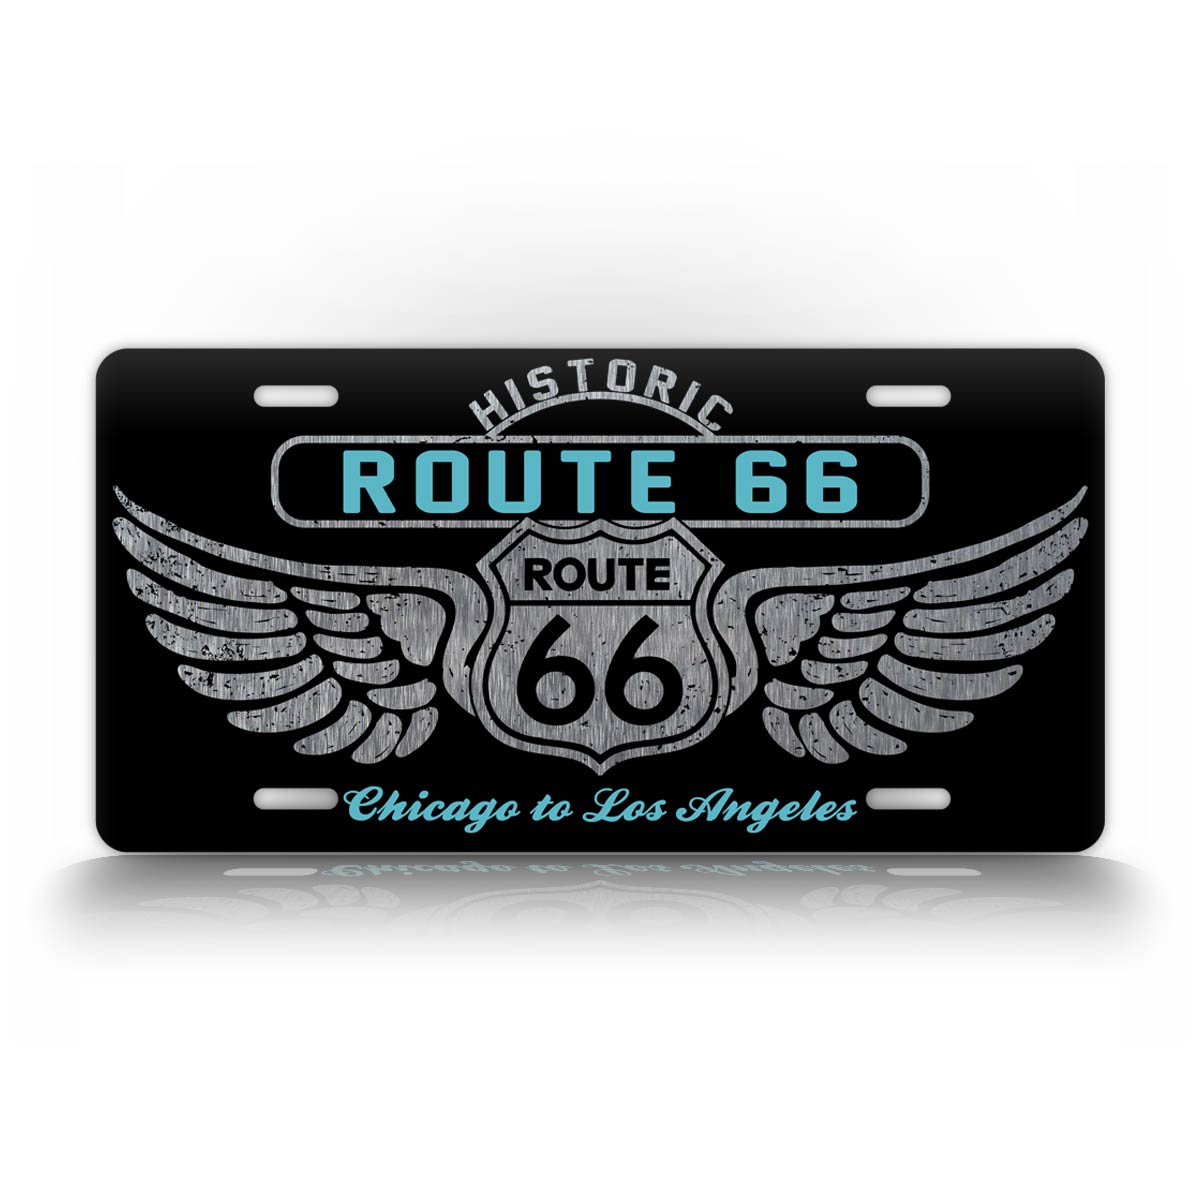 Classy Historic Route 66 Silver License Plate